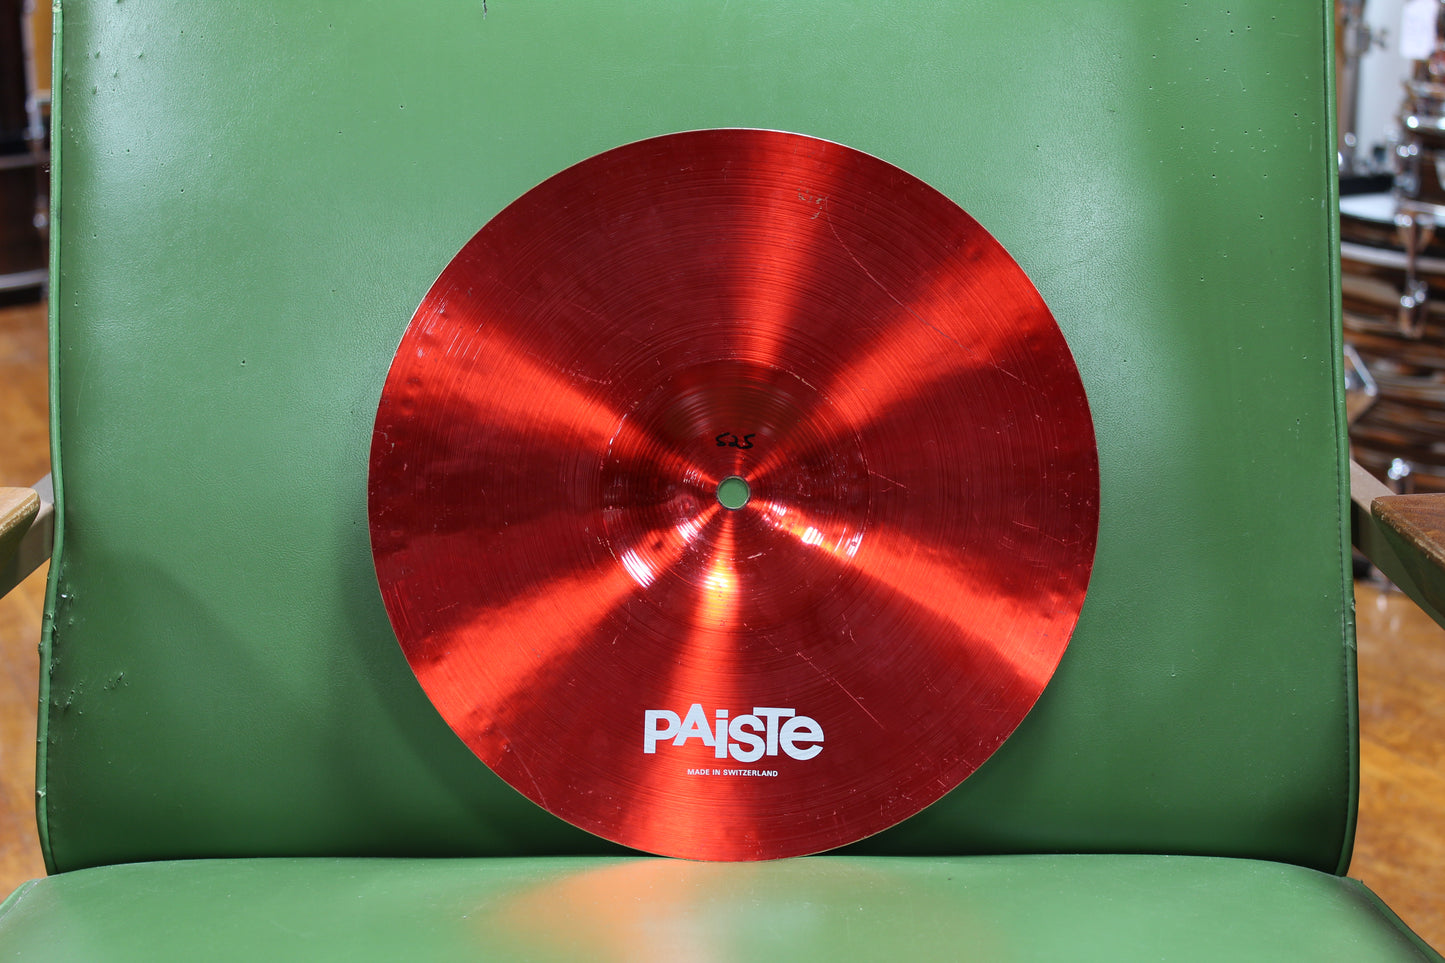 1981 Paiste 12" 2000 Colorsound Splash Cymbal 525g